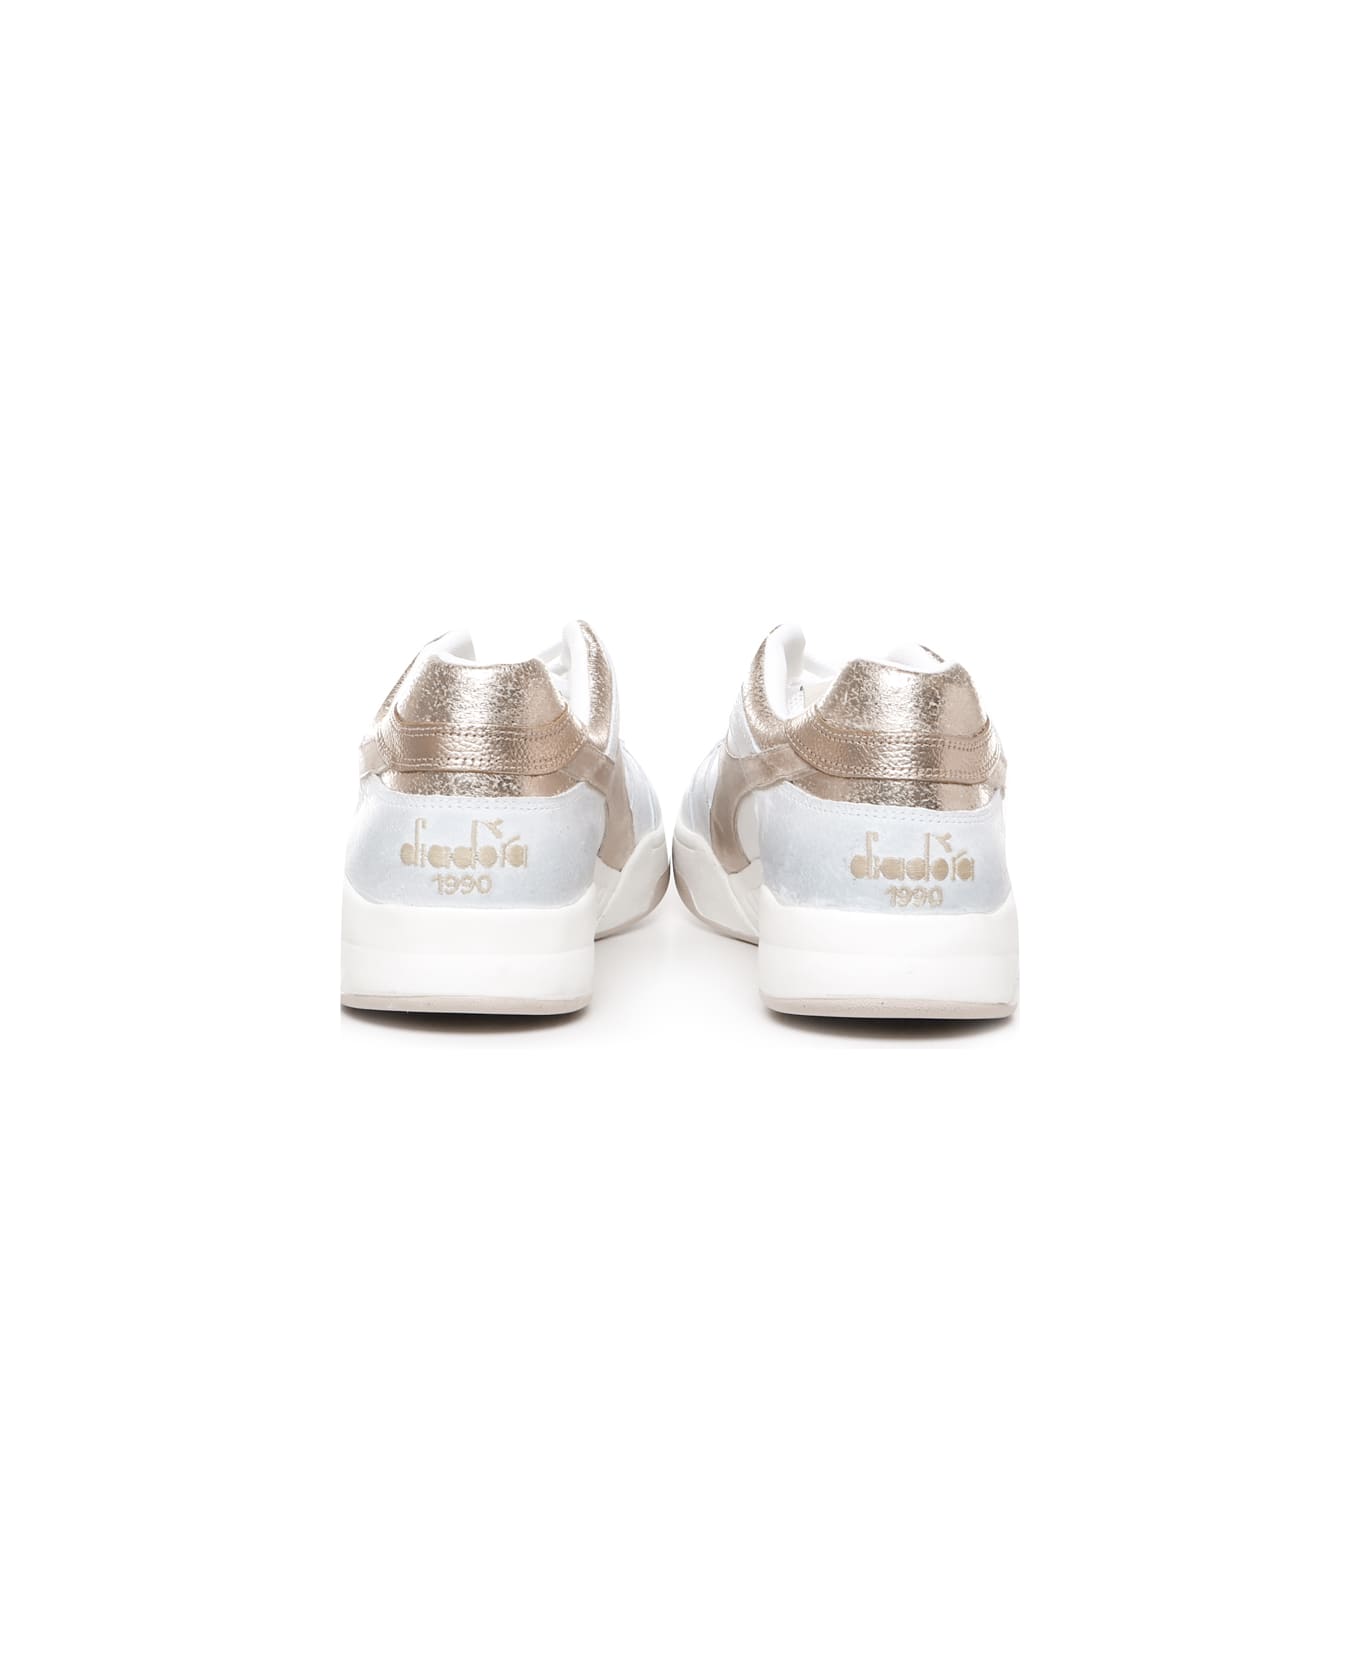 Diadora Heritage Sneakers B.560 Crackle Lamé - White, laminated